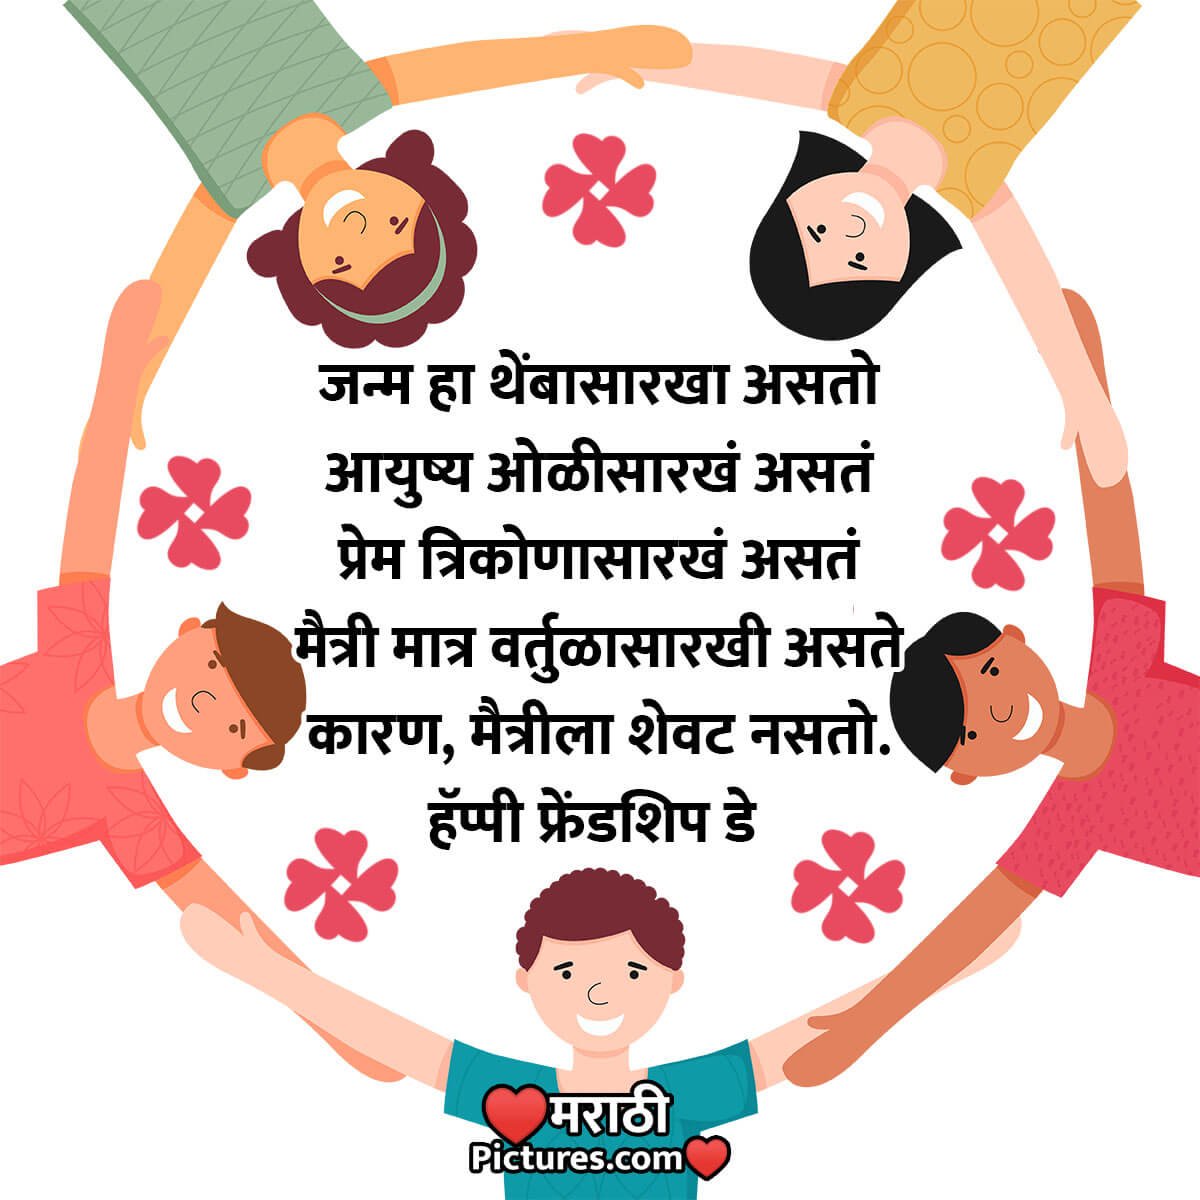 Friendship Day Quote In Marathi - MarathiPictures.com